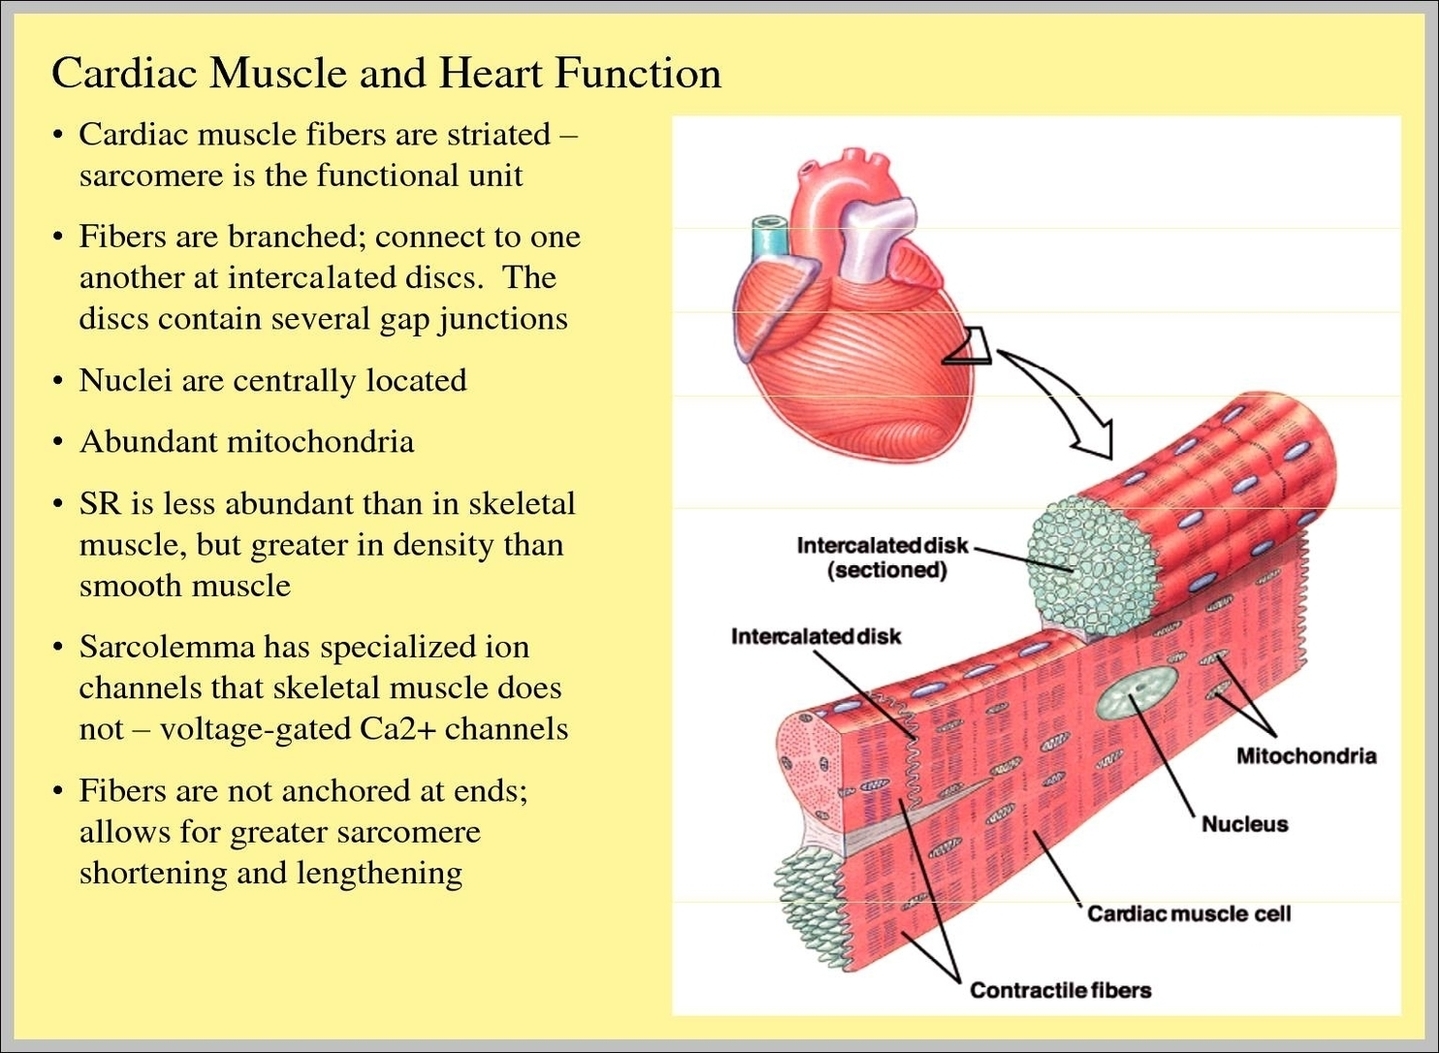 Cardiac Tissue Function Image